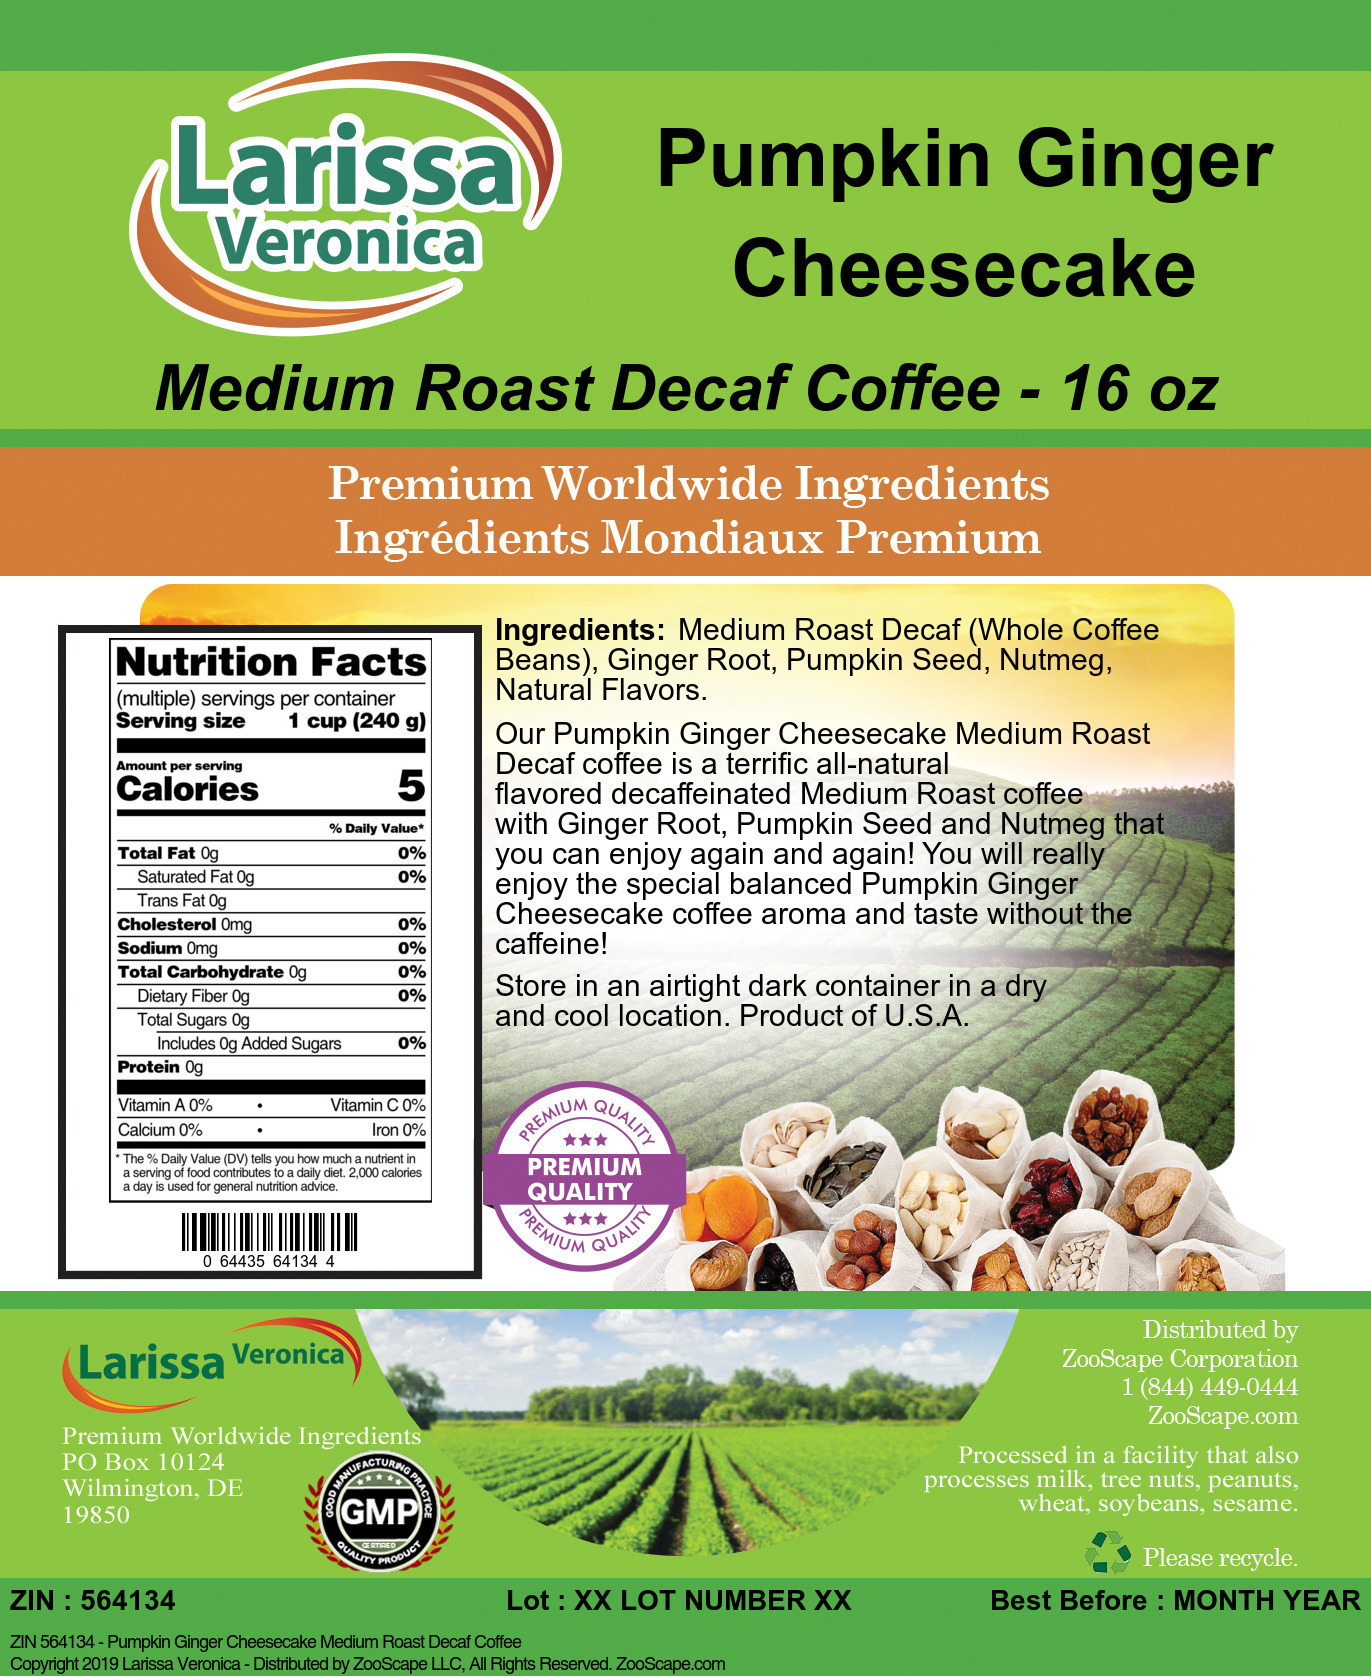 Pumpkin Ginger Cheesecake Medium Roast Decaf Coffee - Label